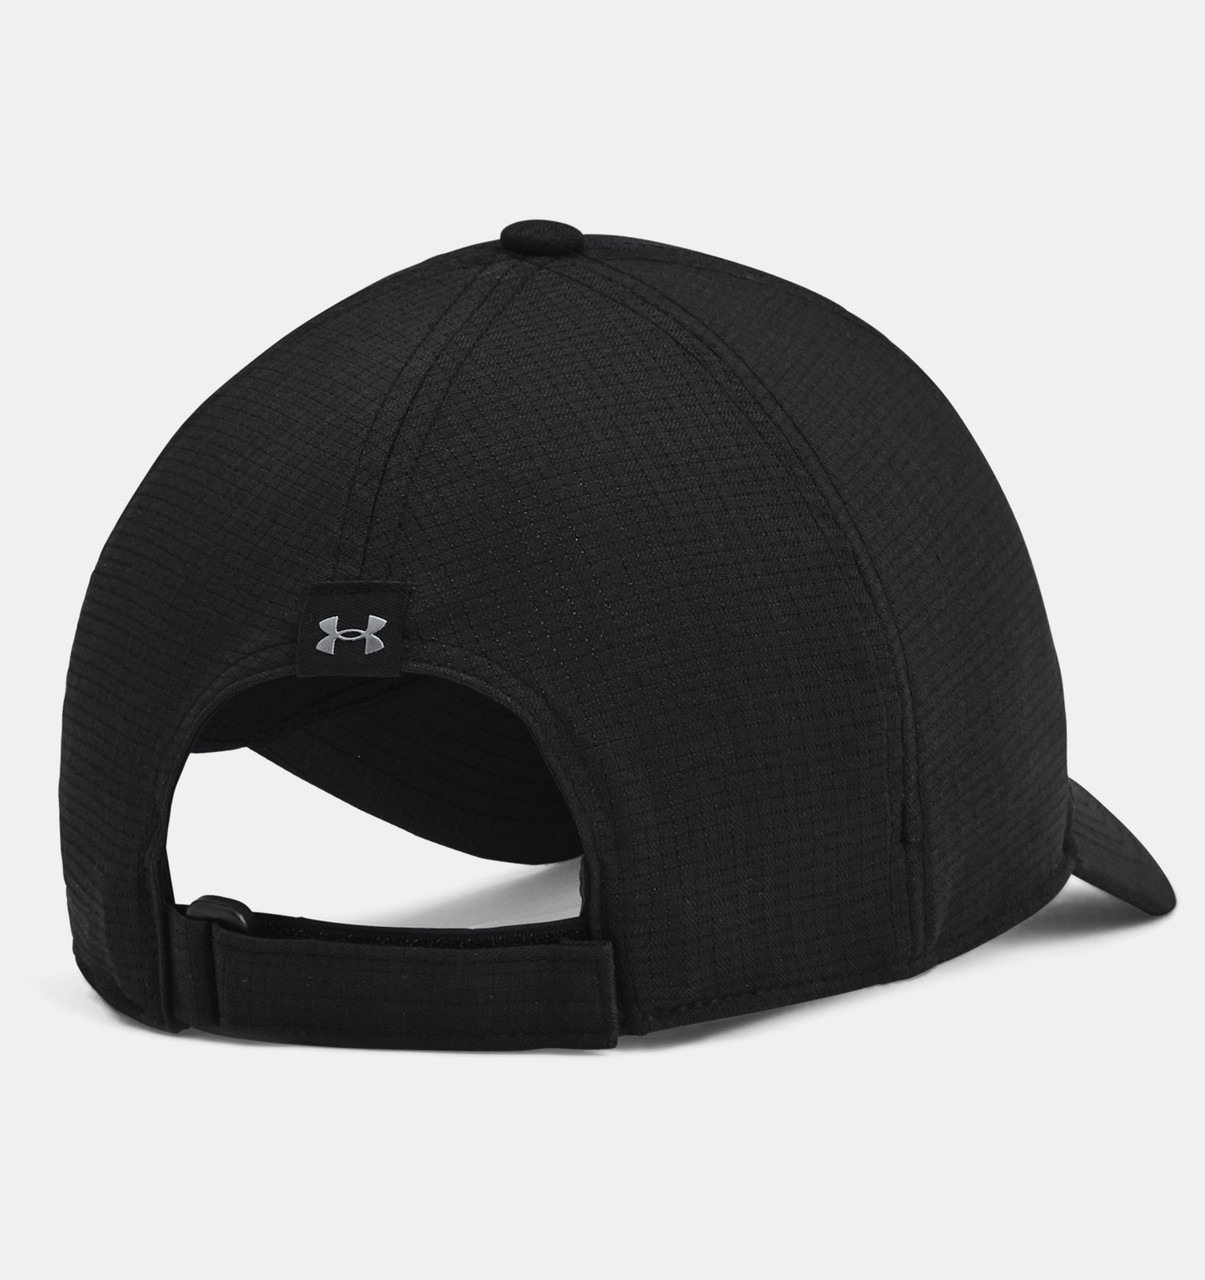 Men's Under Armour ArmourVent Adjustable Hat, Black